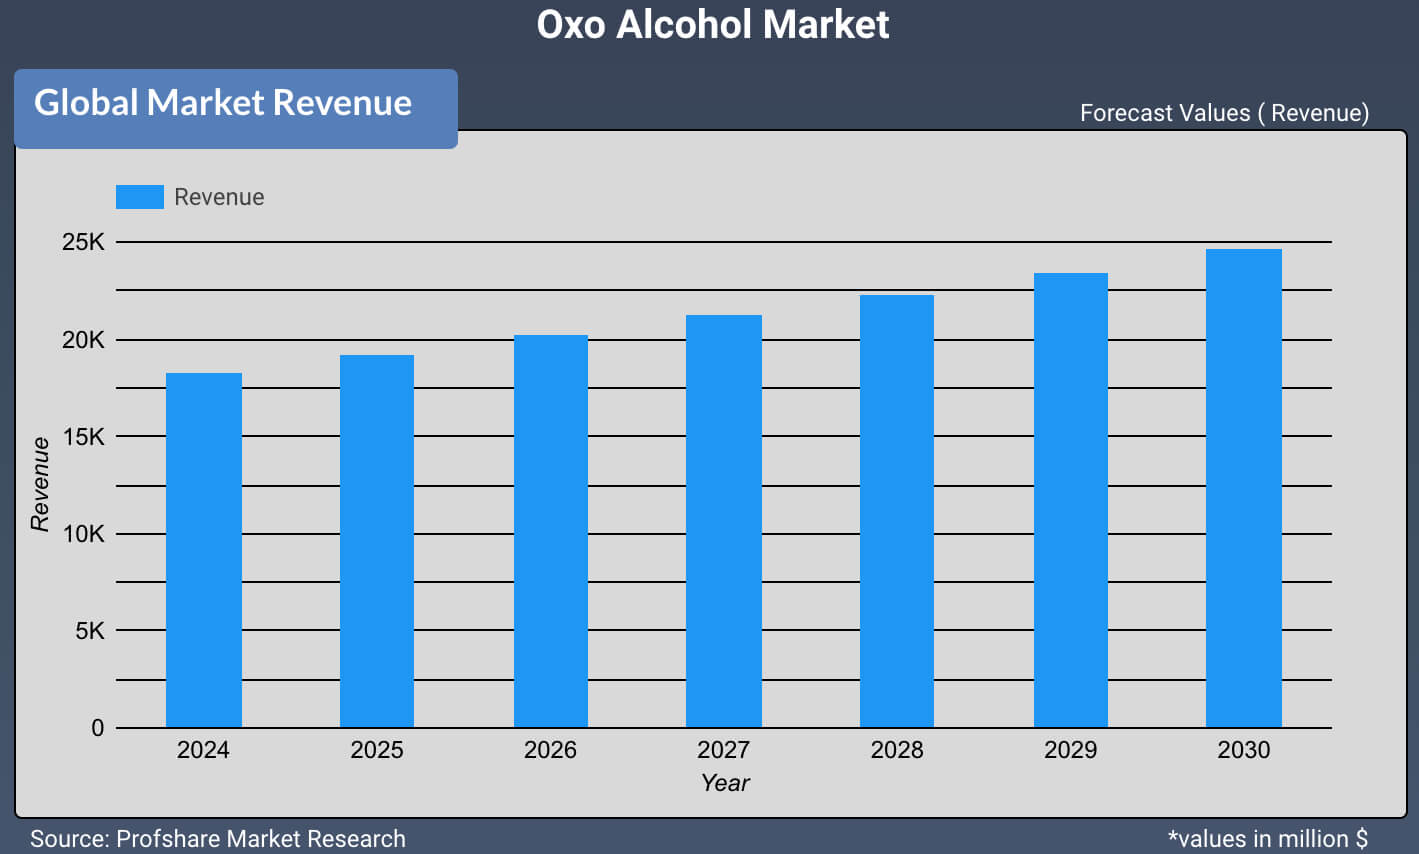 Oxo Alcohol Market